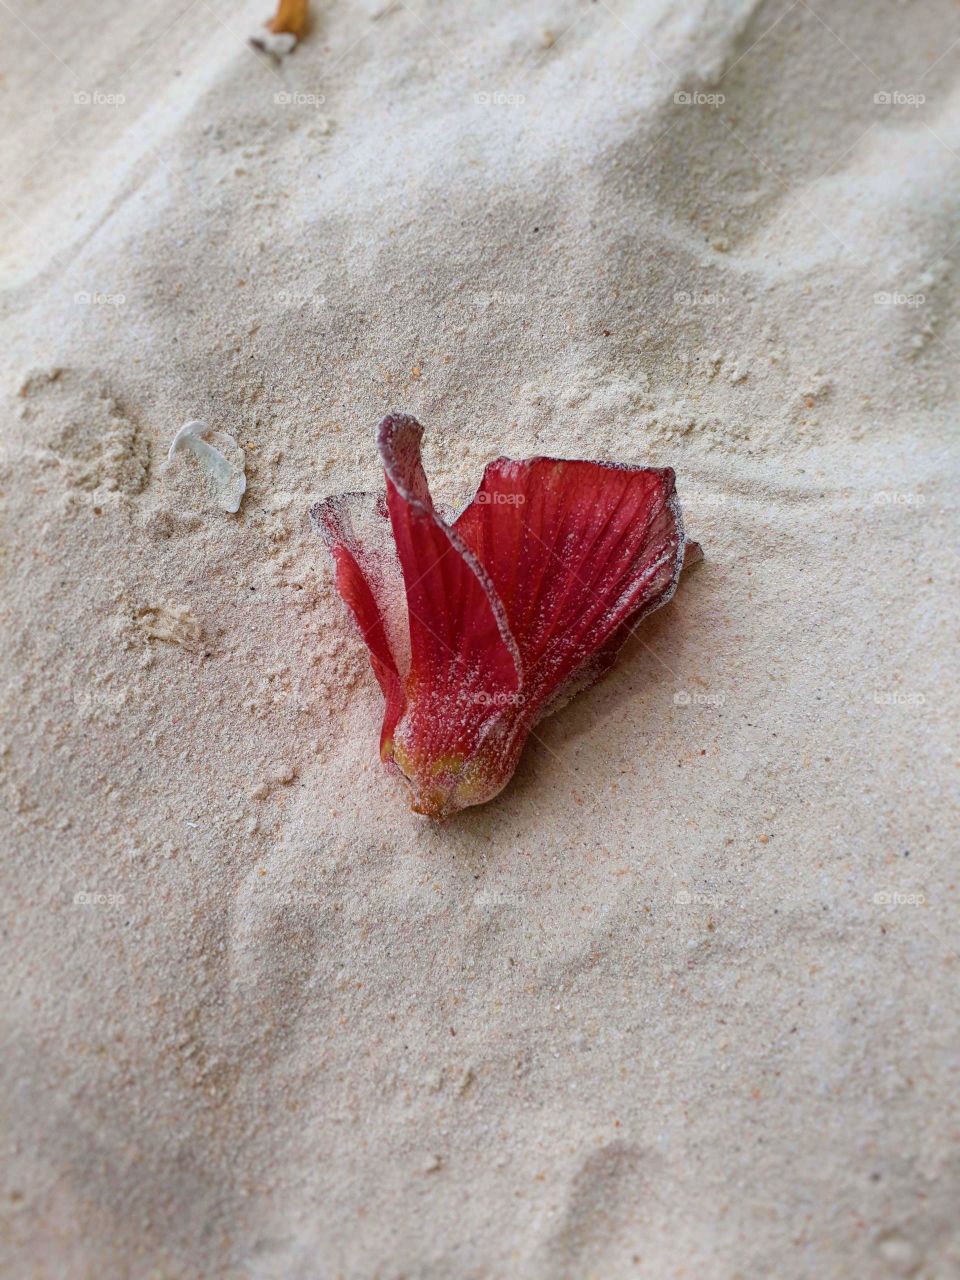 red sea abemone and sandy beach.